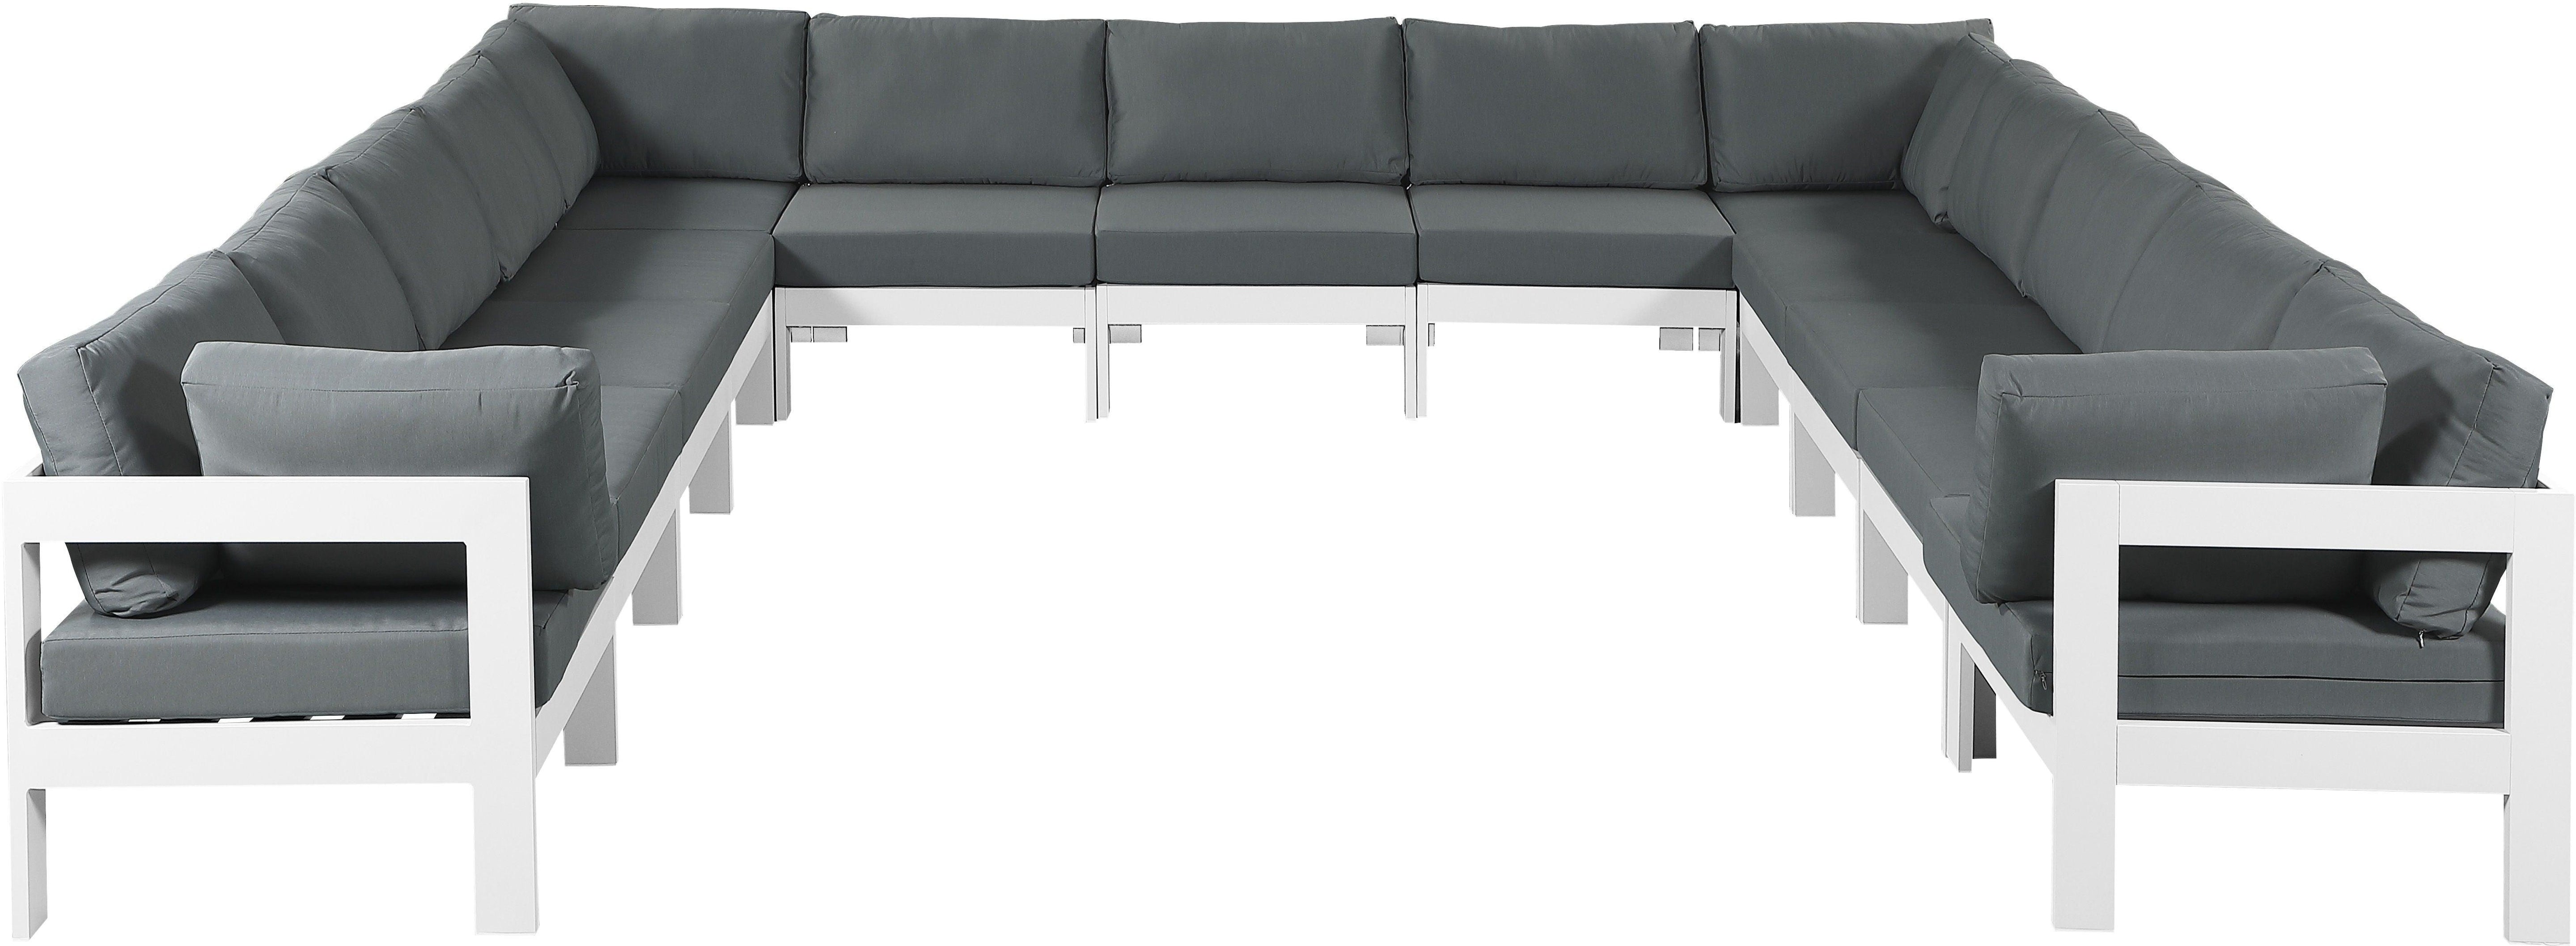 Meridian Furniture - Nizuc - Outdoor Patio Modular Sectional 13 Piece - Grey - Fabric - 5th Avenue Furniture